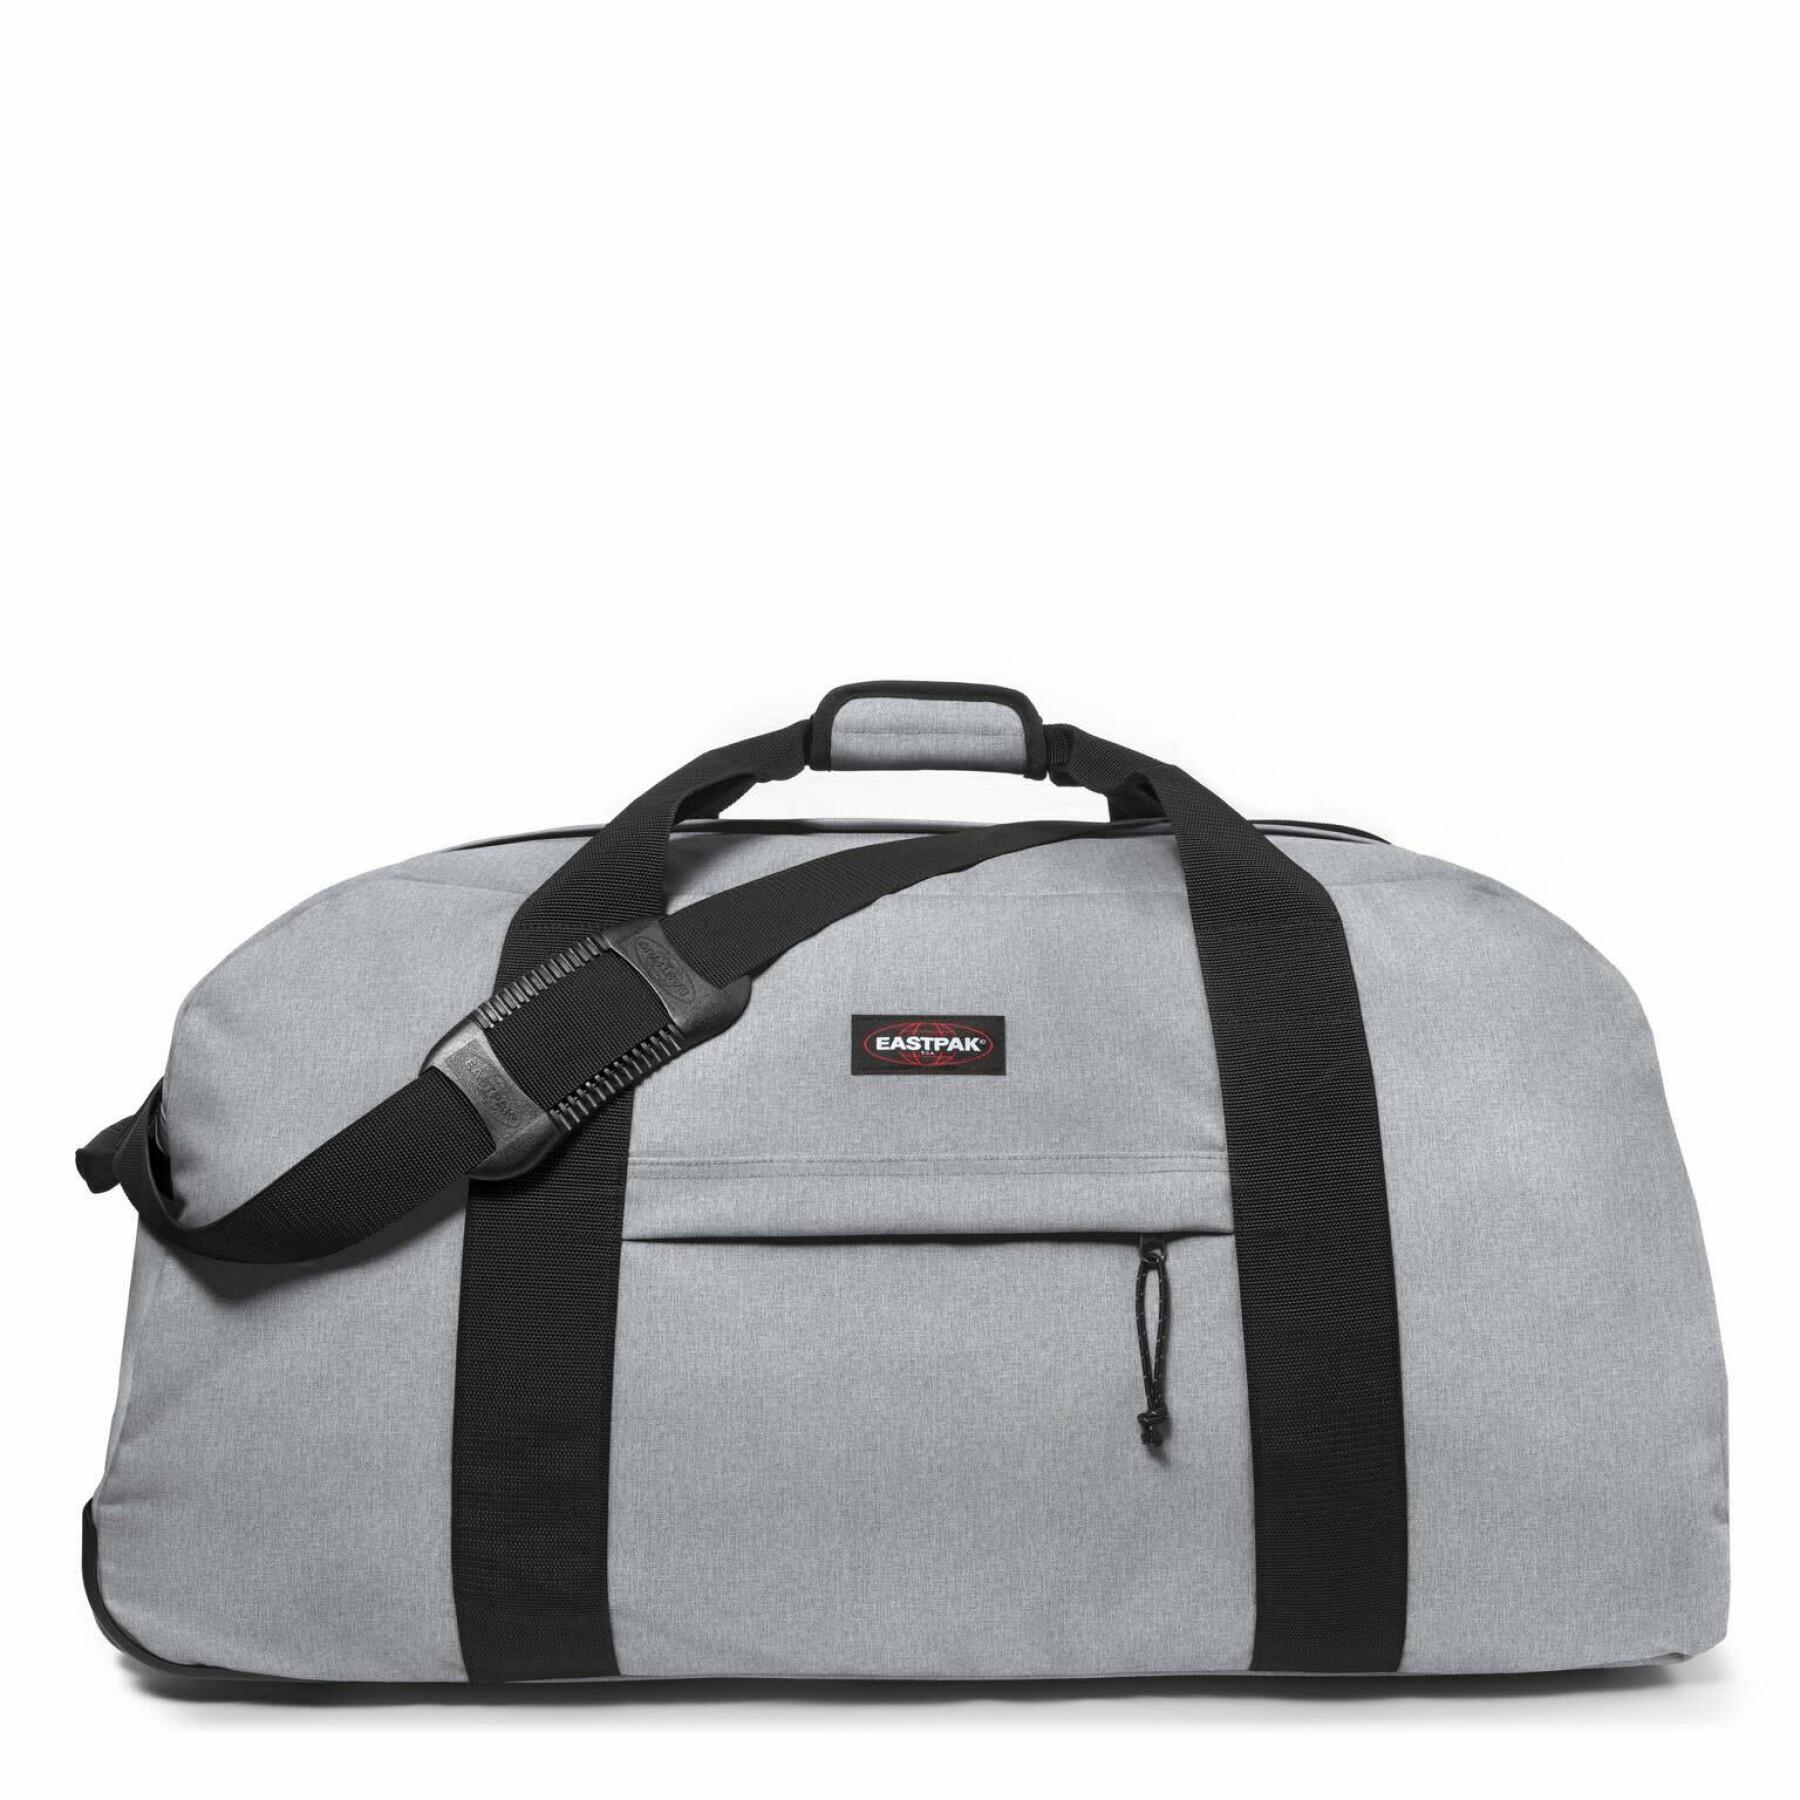 Travel bag Eastpak Warehouse